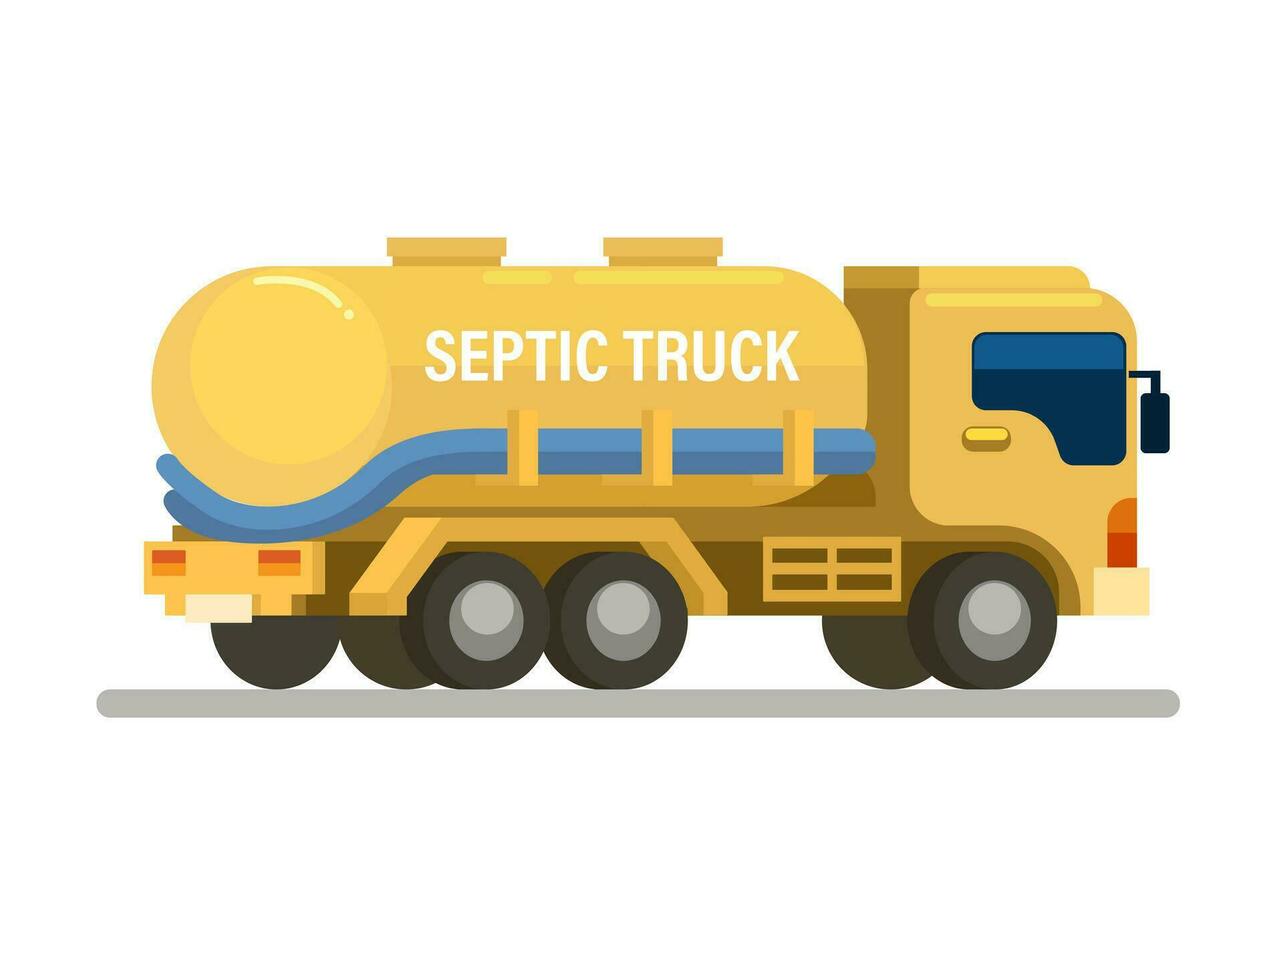 Septic Tank Vacuum Service Truck illustration Vector